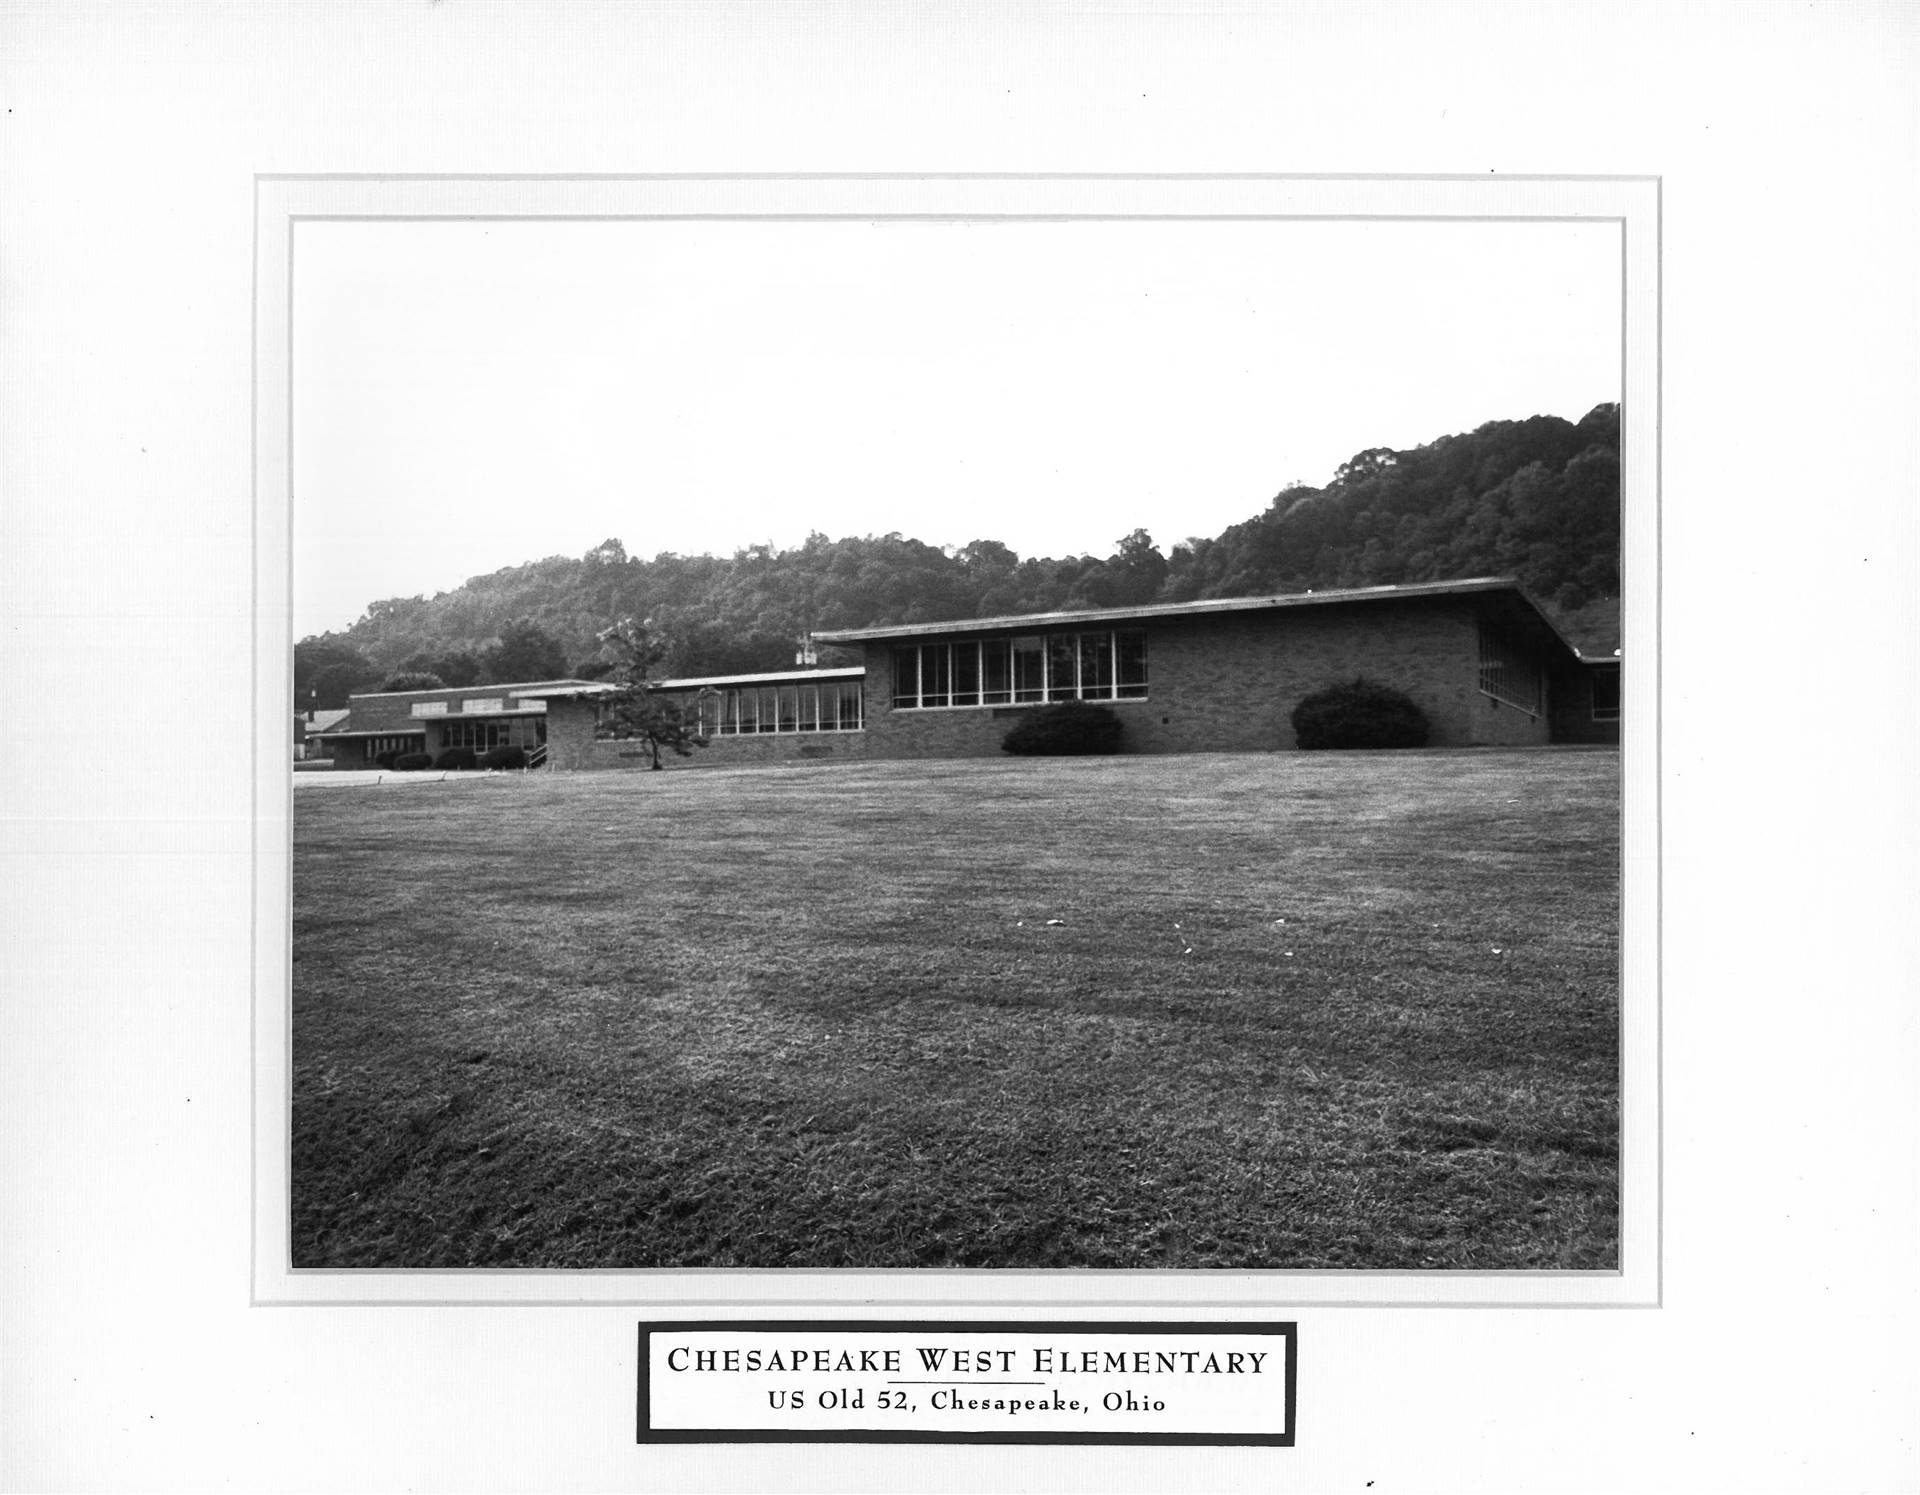 Chesapeake West Elementary School - US Old 52, Chesapeake, Ohio